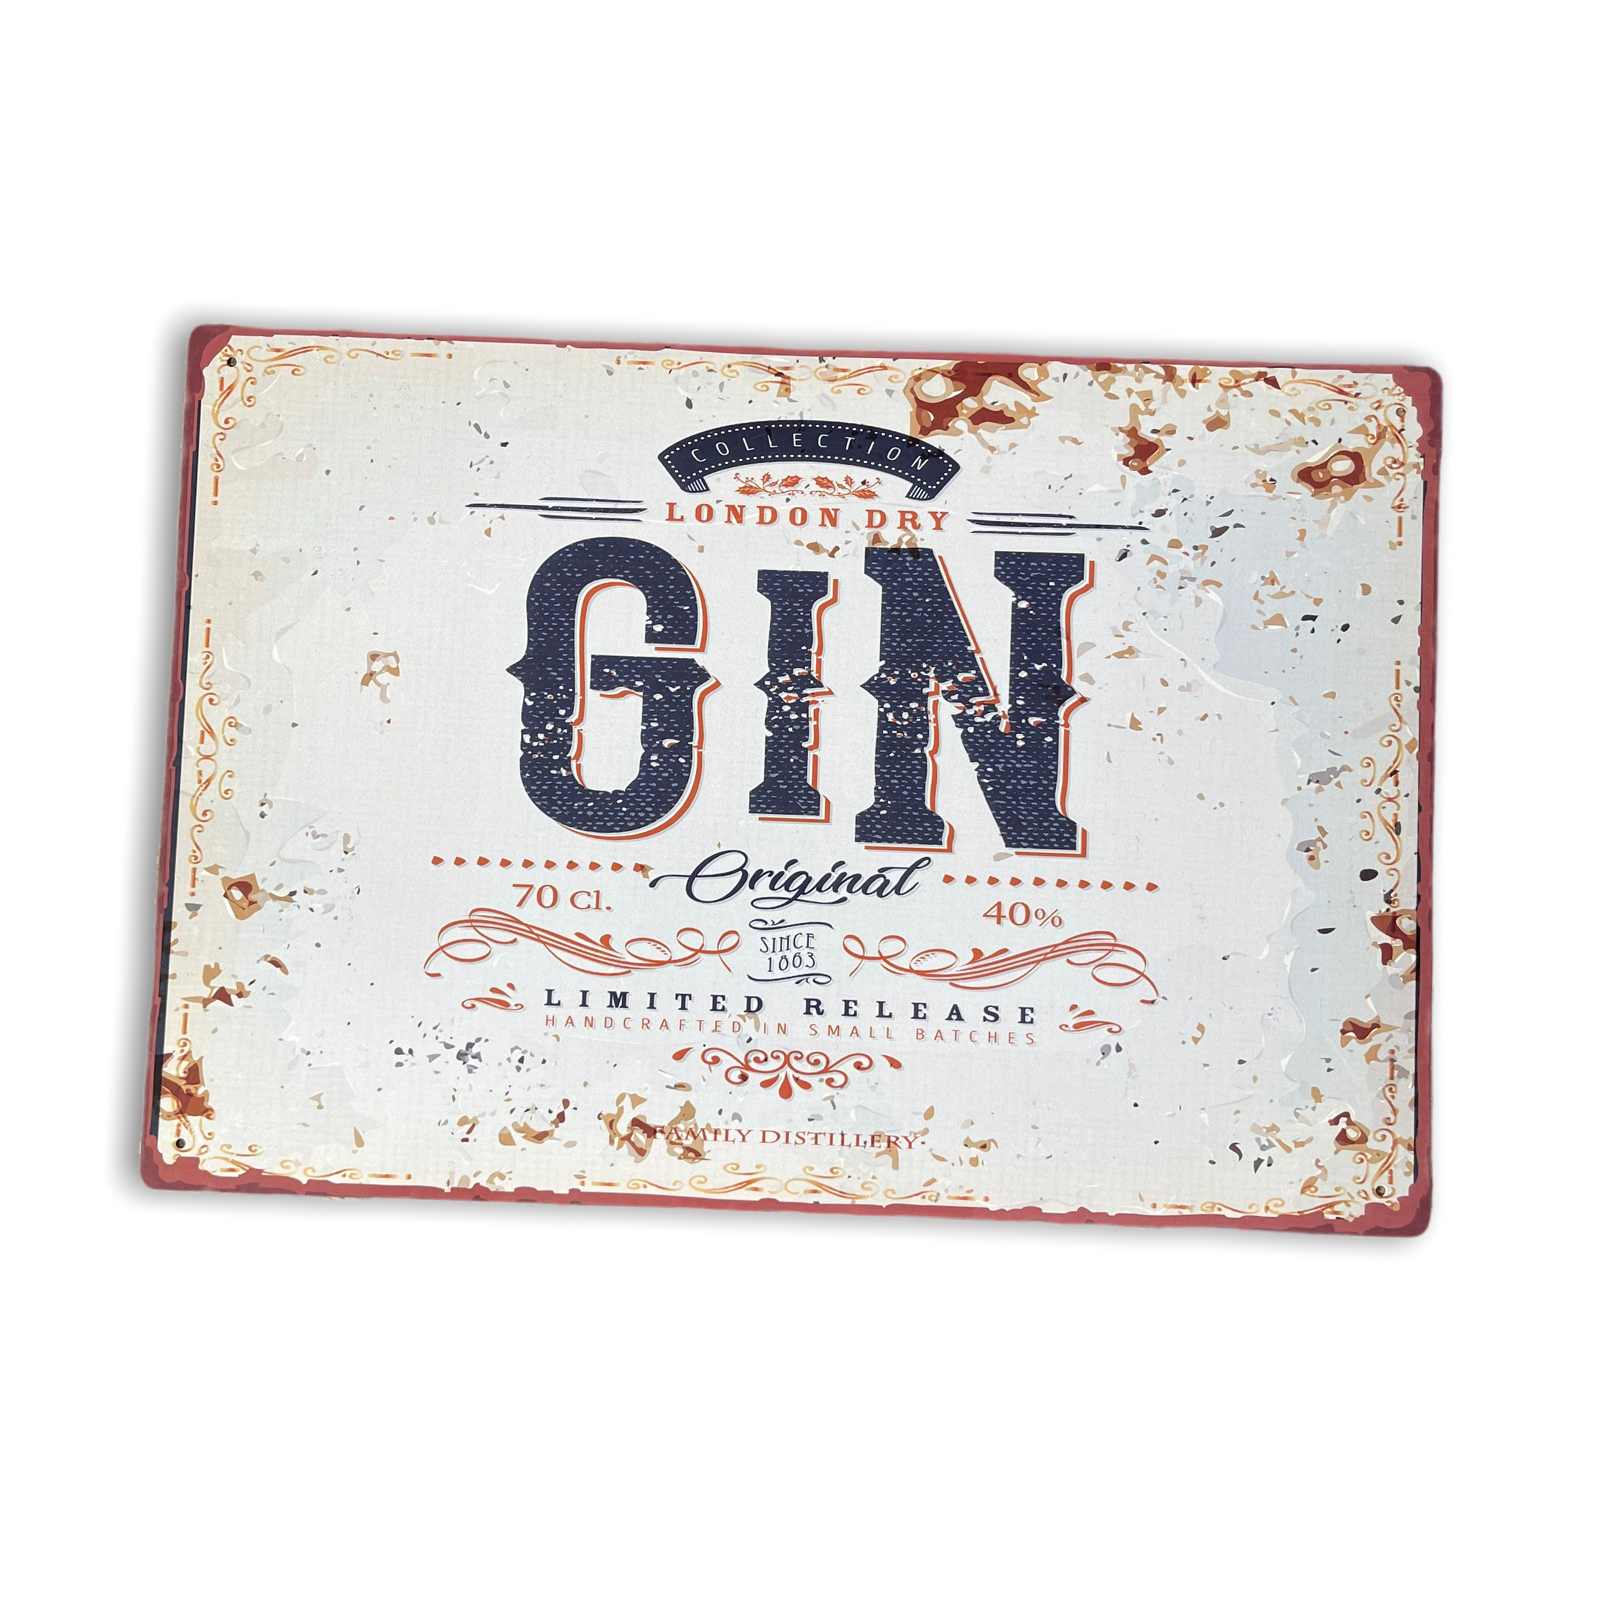 Vintage Metal Sign - Retro Advertising London Dry Gin - Kaftan direct